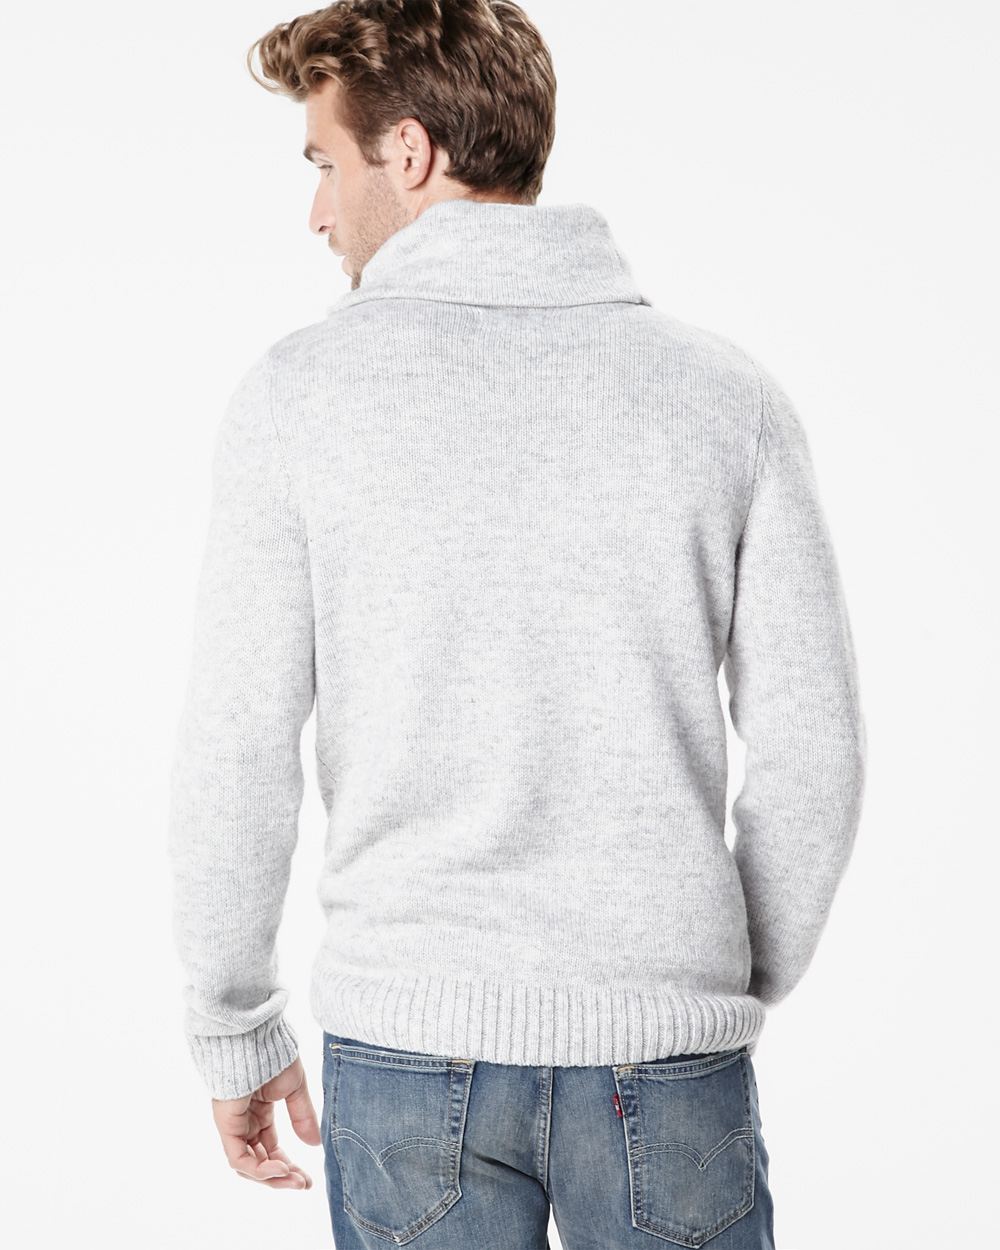 Snood collar sweater | RW&CO.